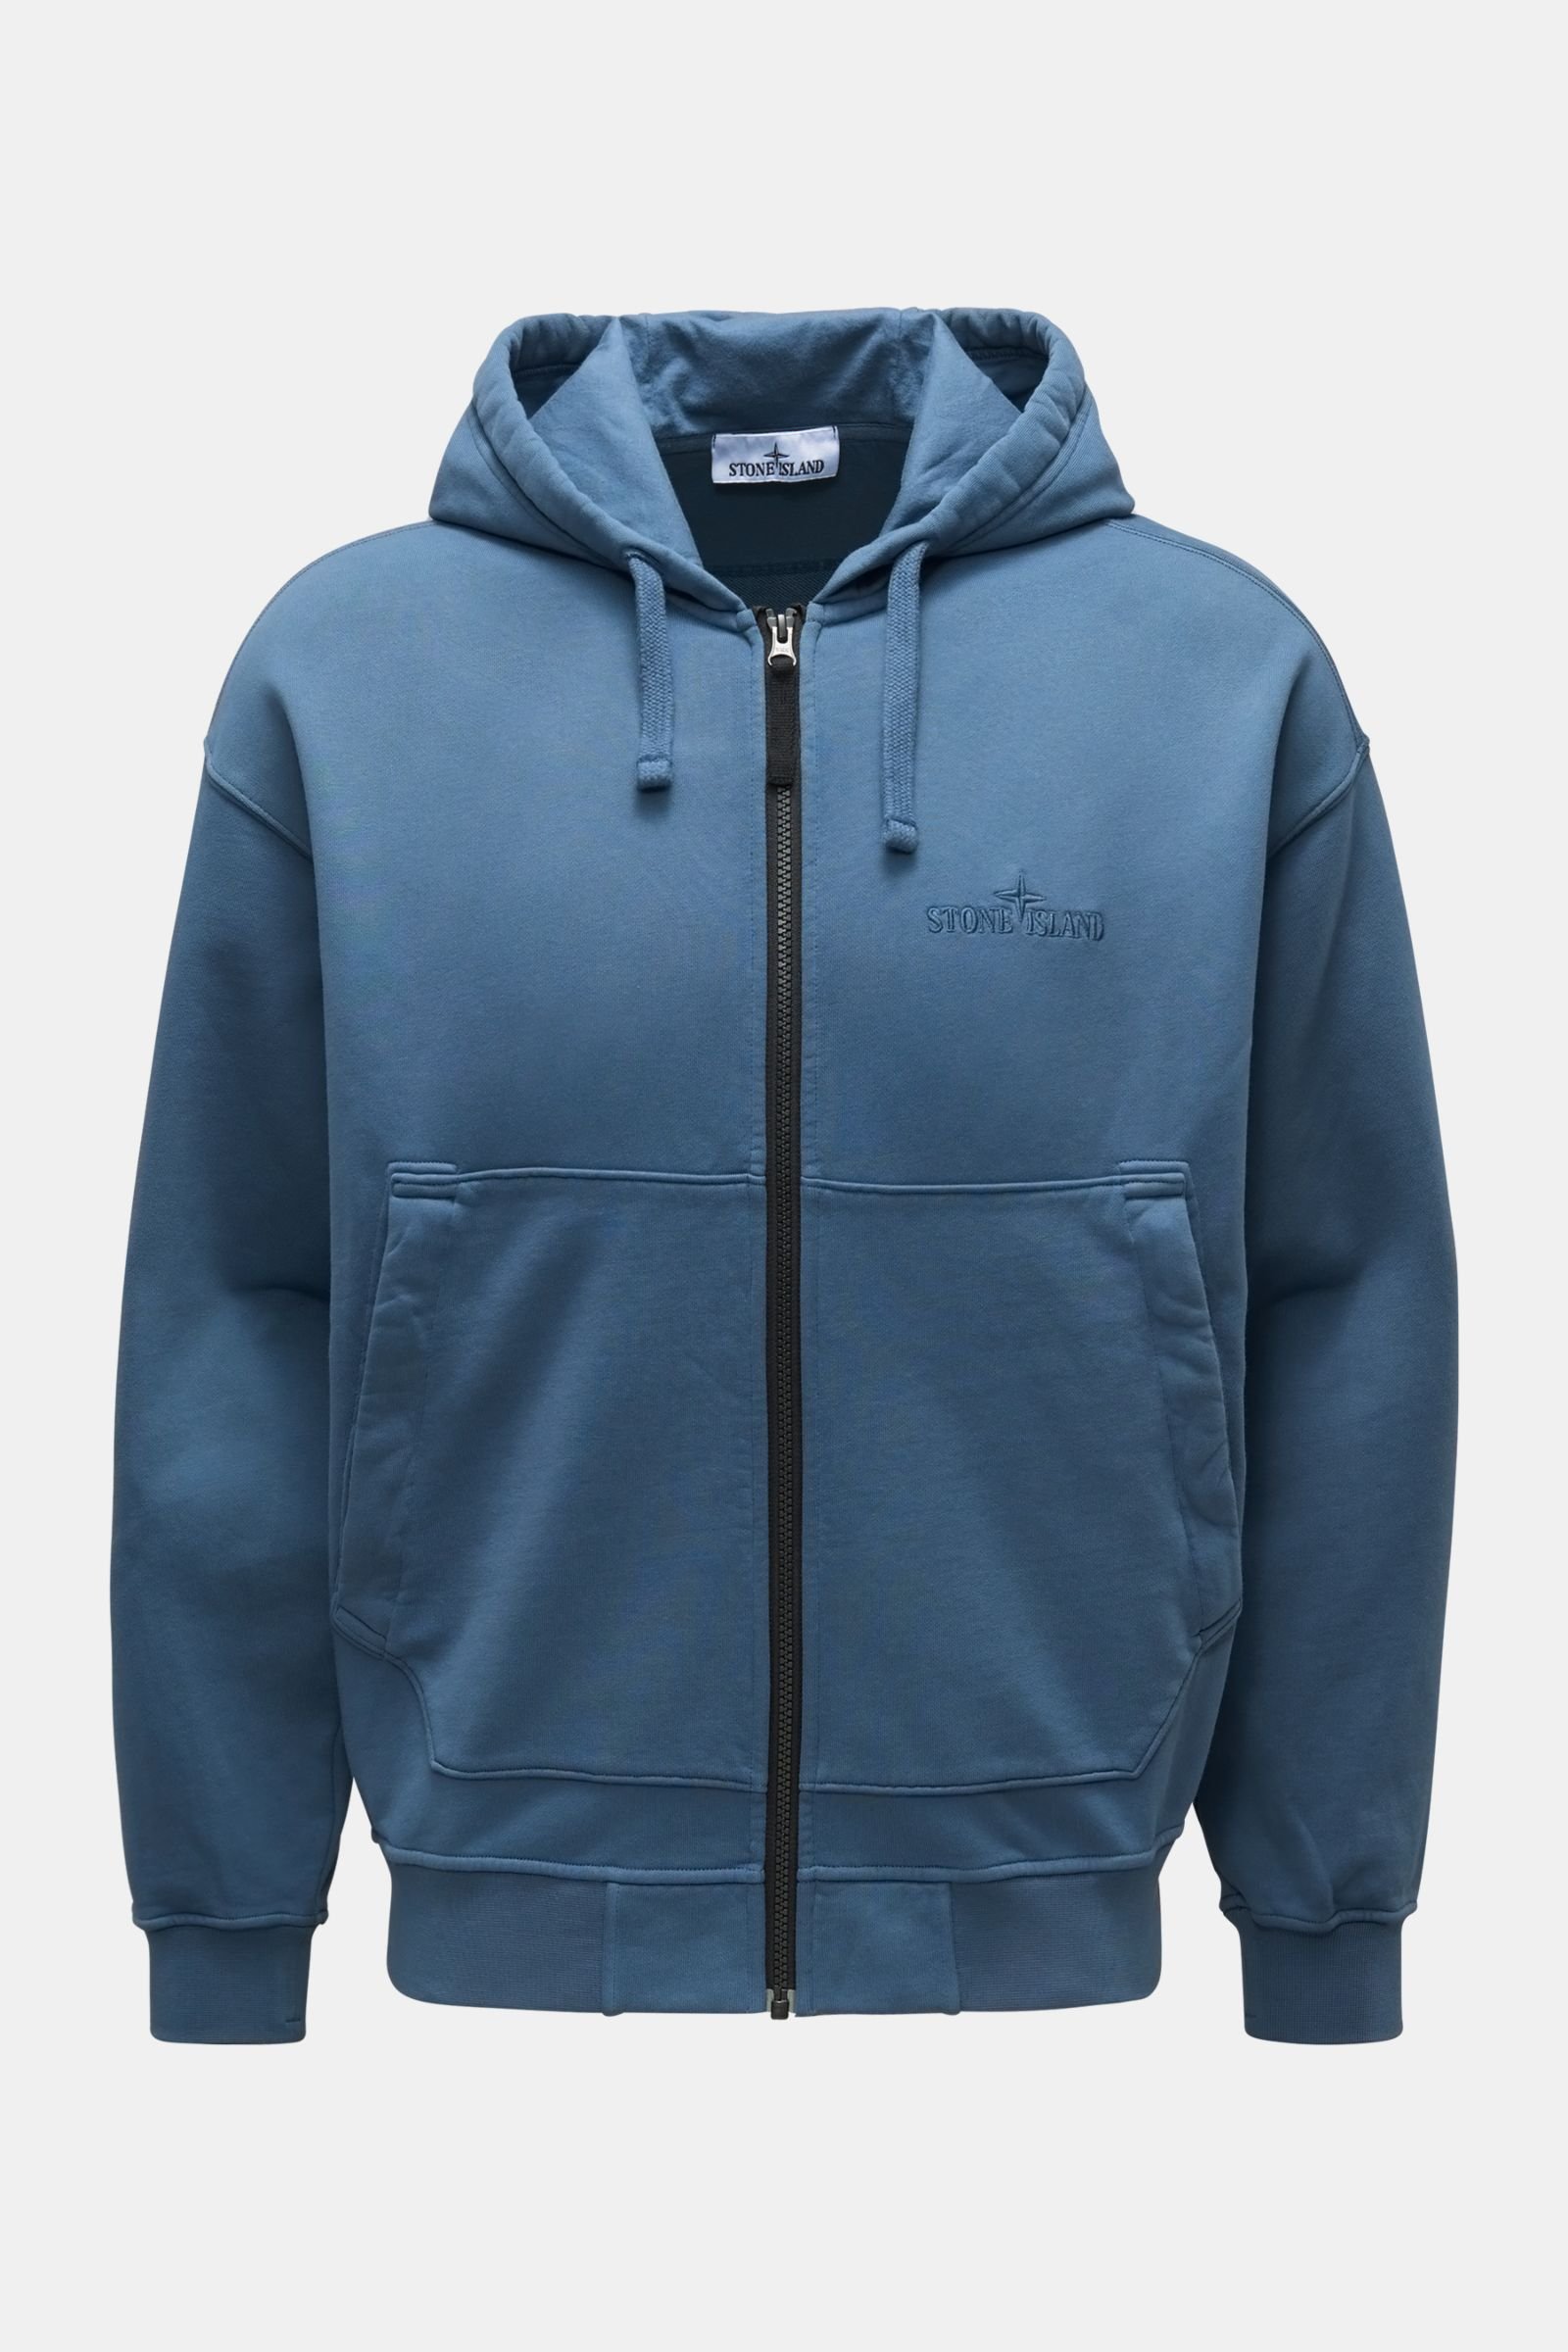 Sweat jacket grey-blue 